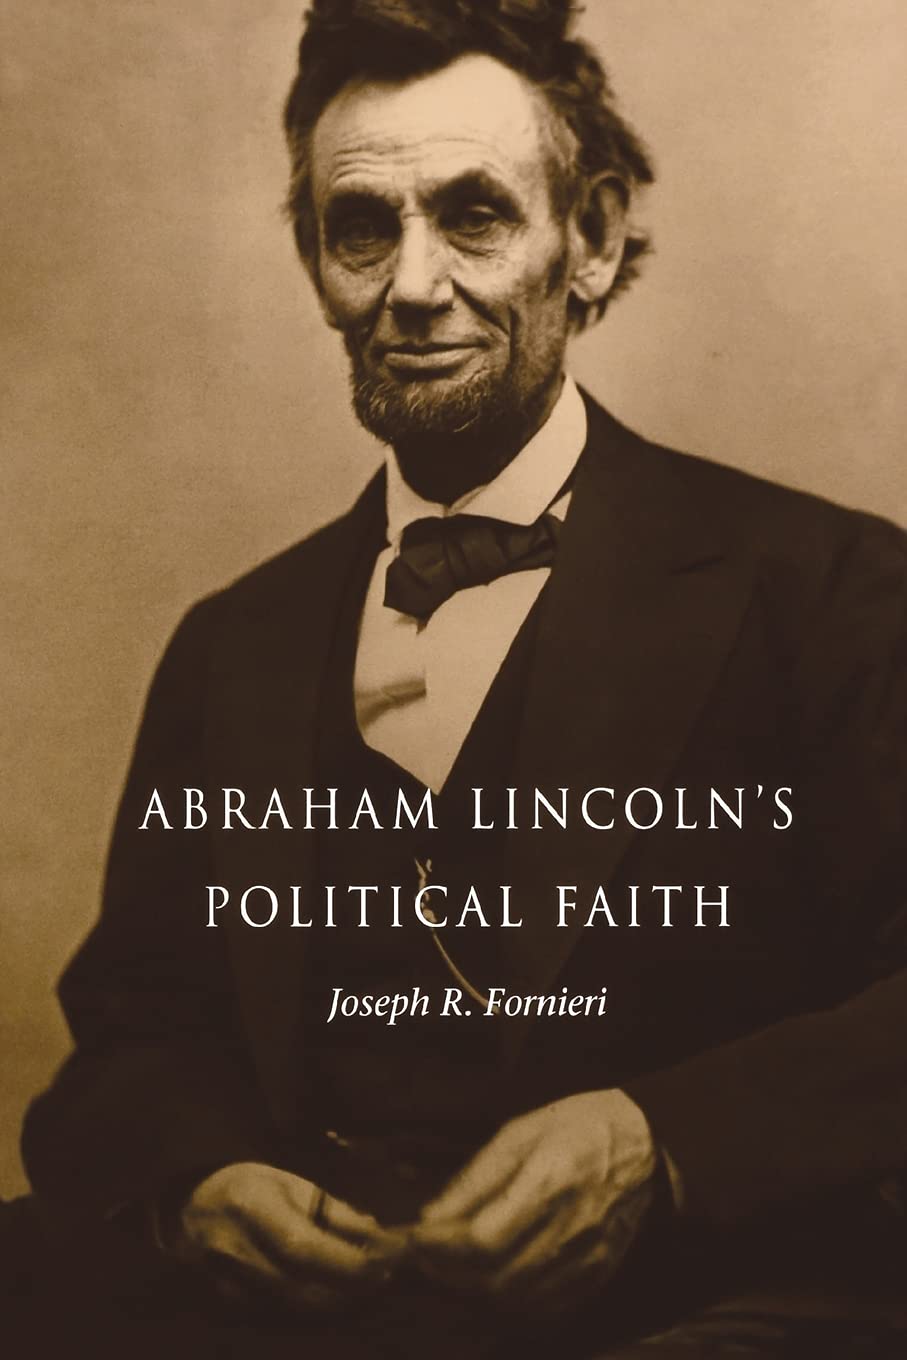 Cover art for the book Abraham Lincoln's Political Faith.